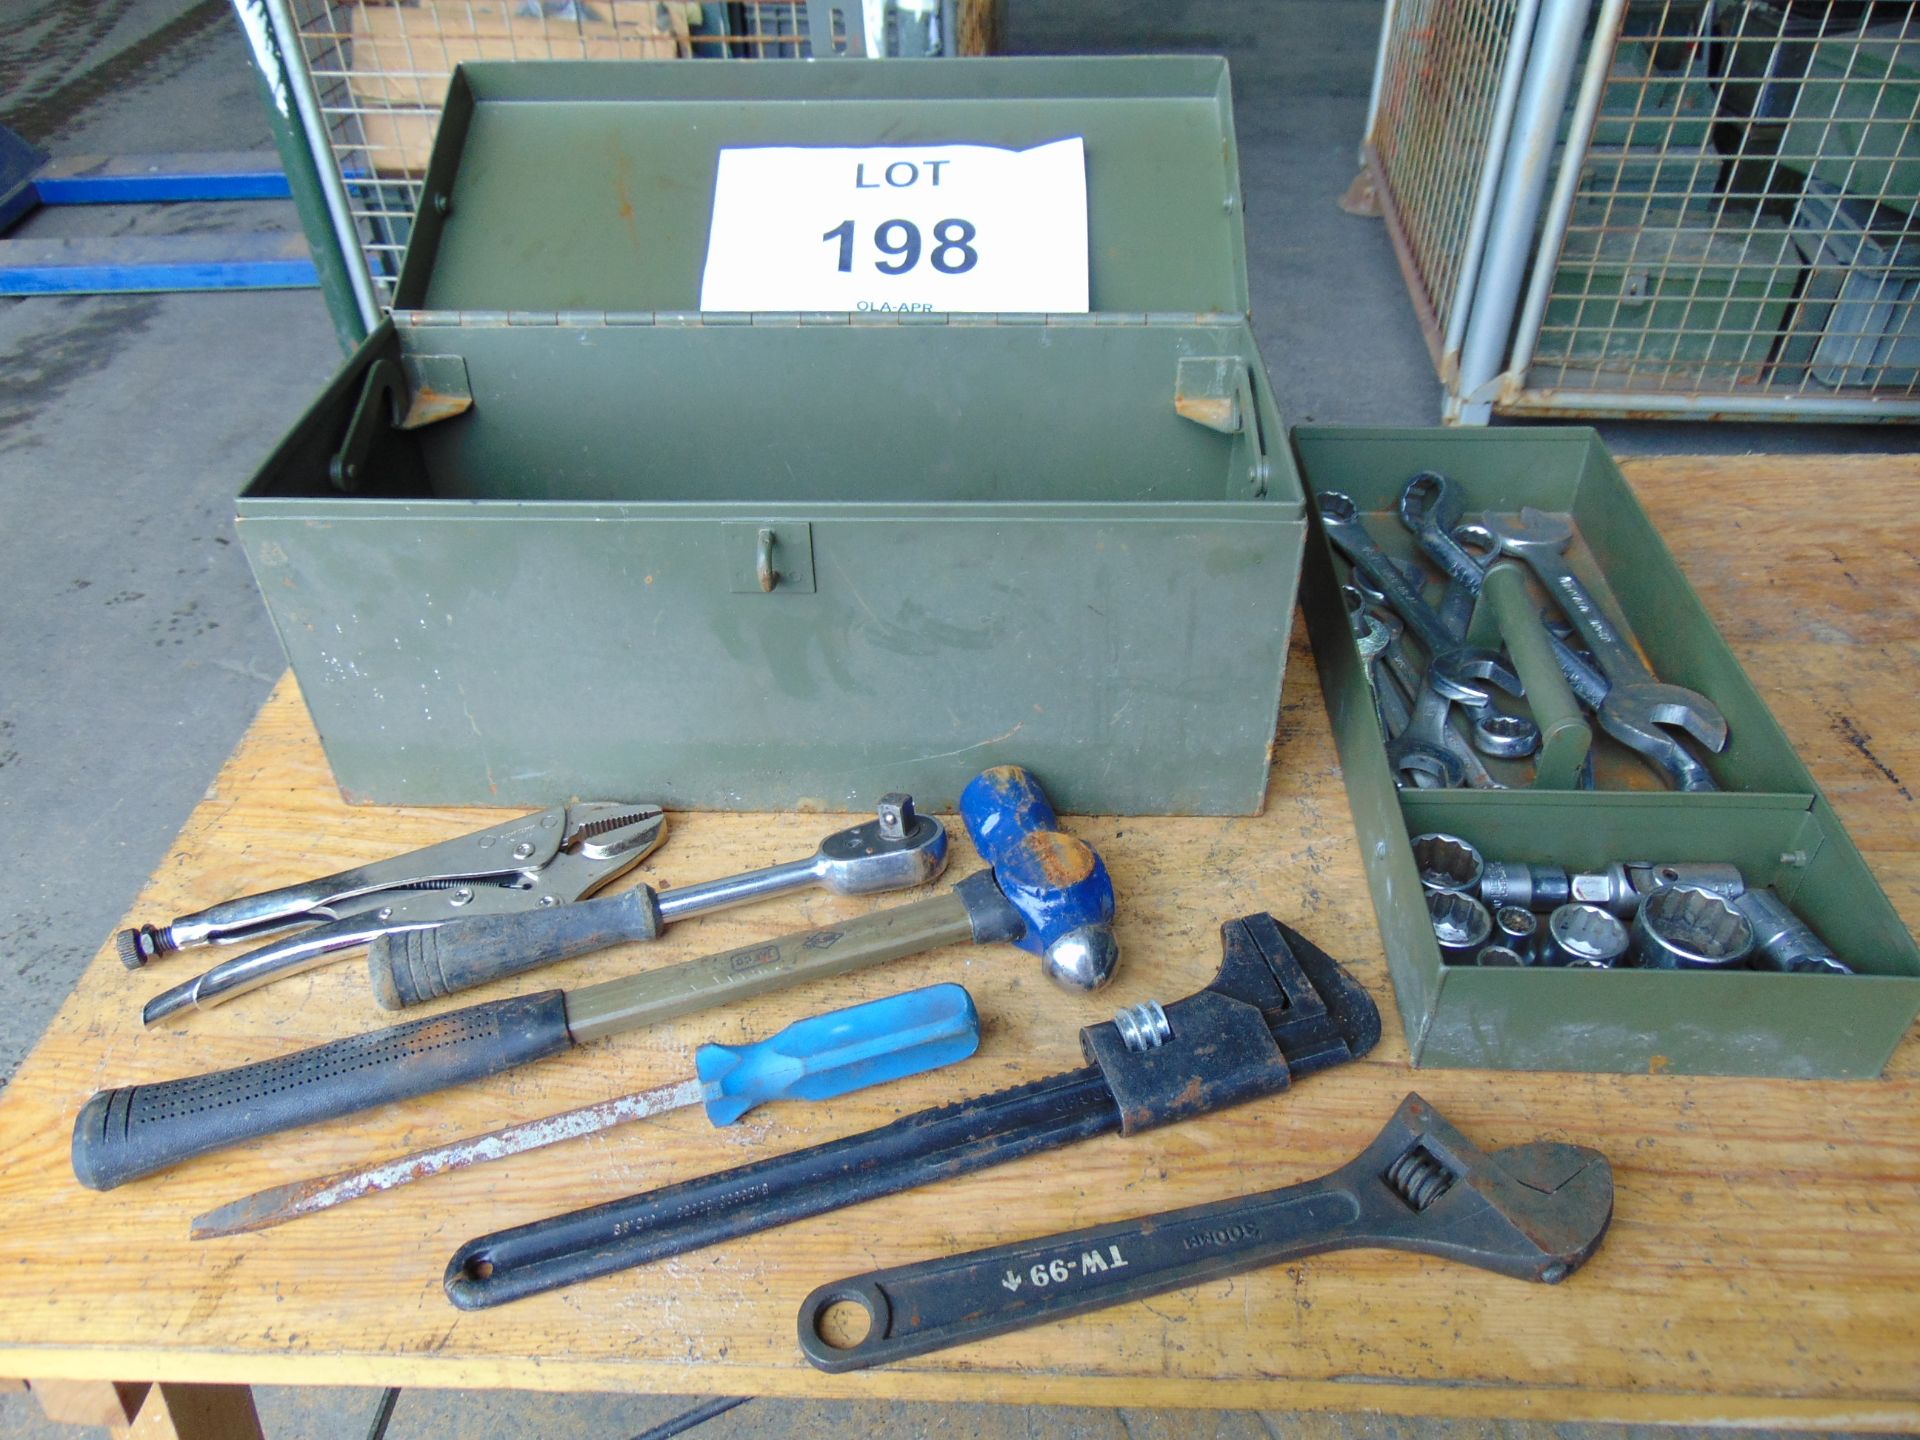 Ex MOD Tool Box w/ Various Tools